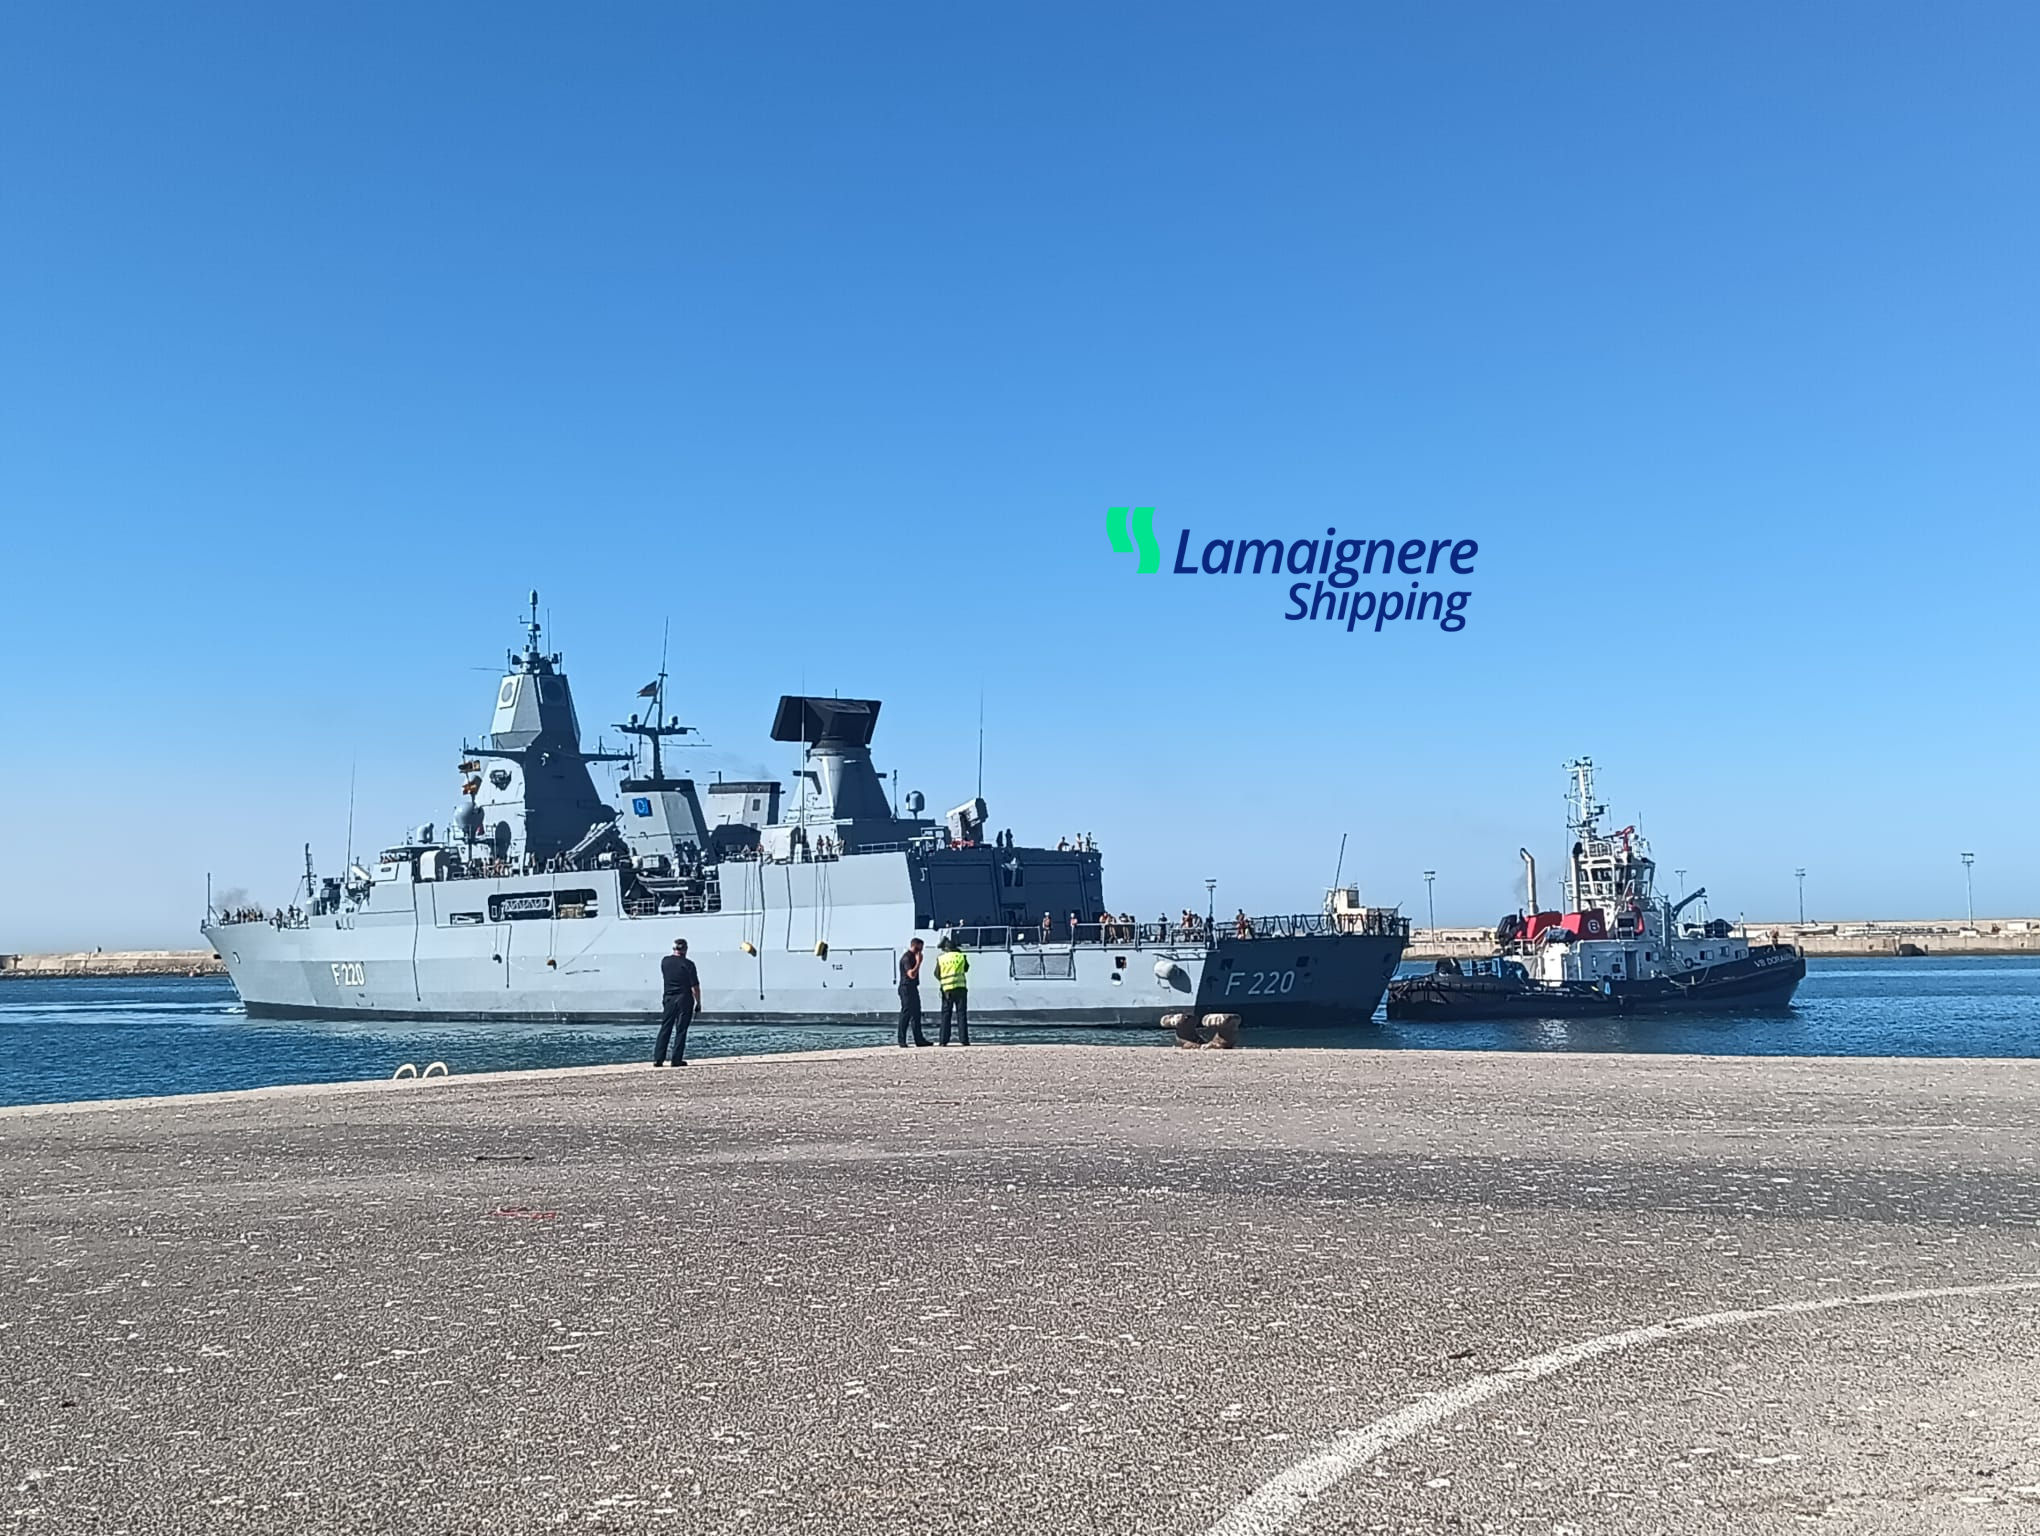 Lamaignere Shipping coordinates the technical call of the impressive German ship FGS Hamburg